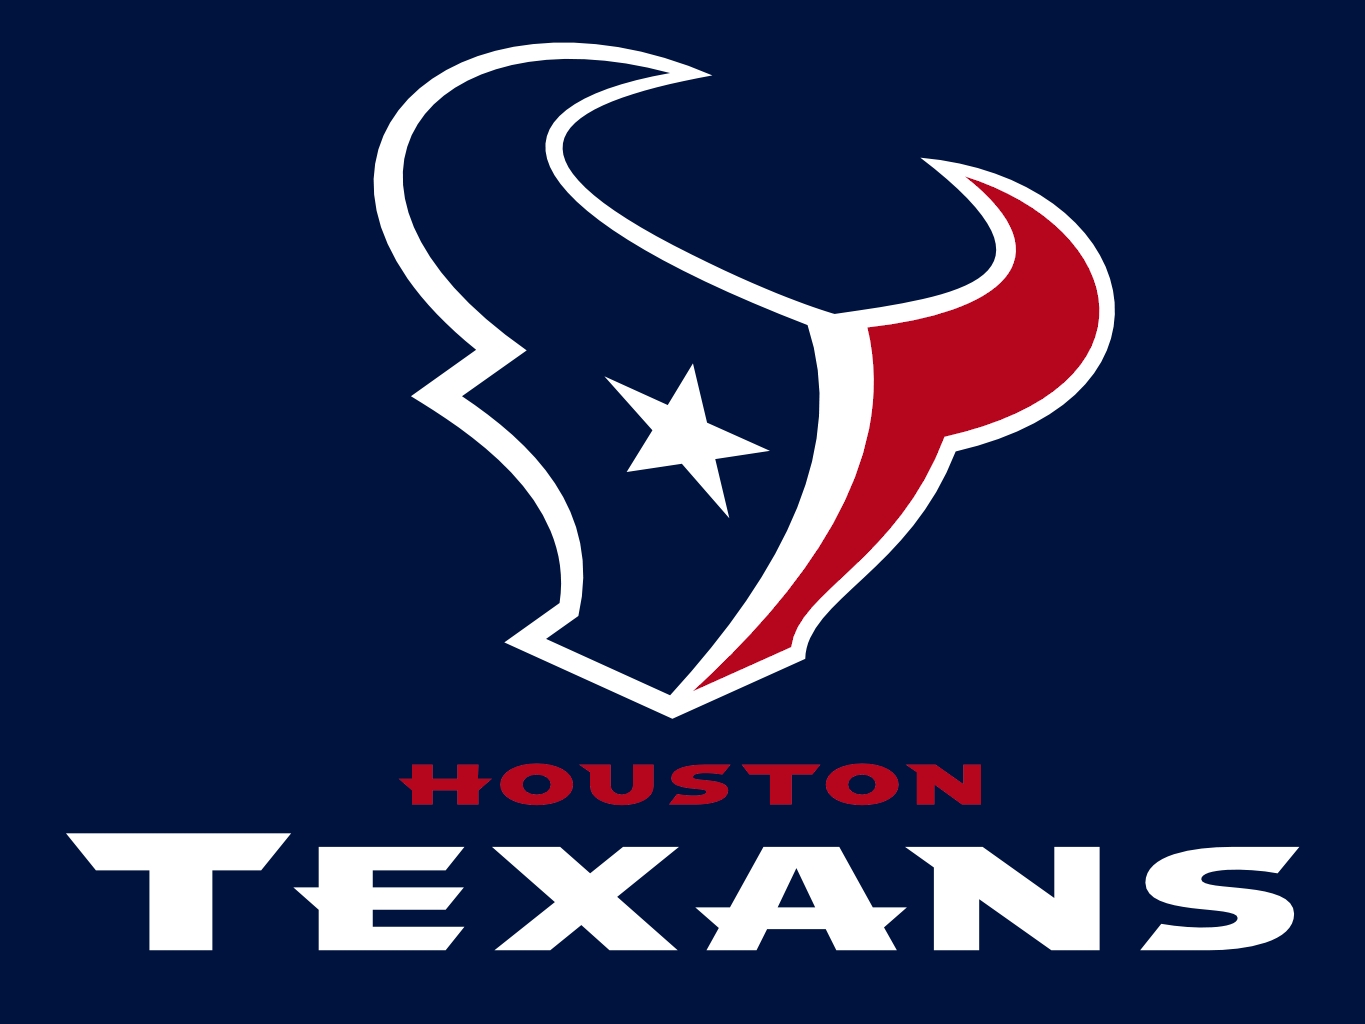 NFL Teams – Houston Texans - Collins Flags Blog